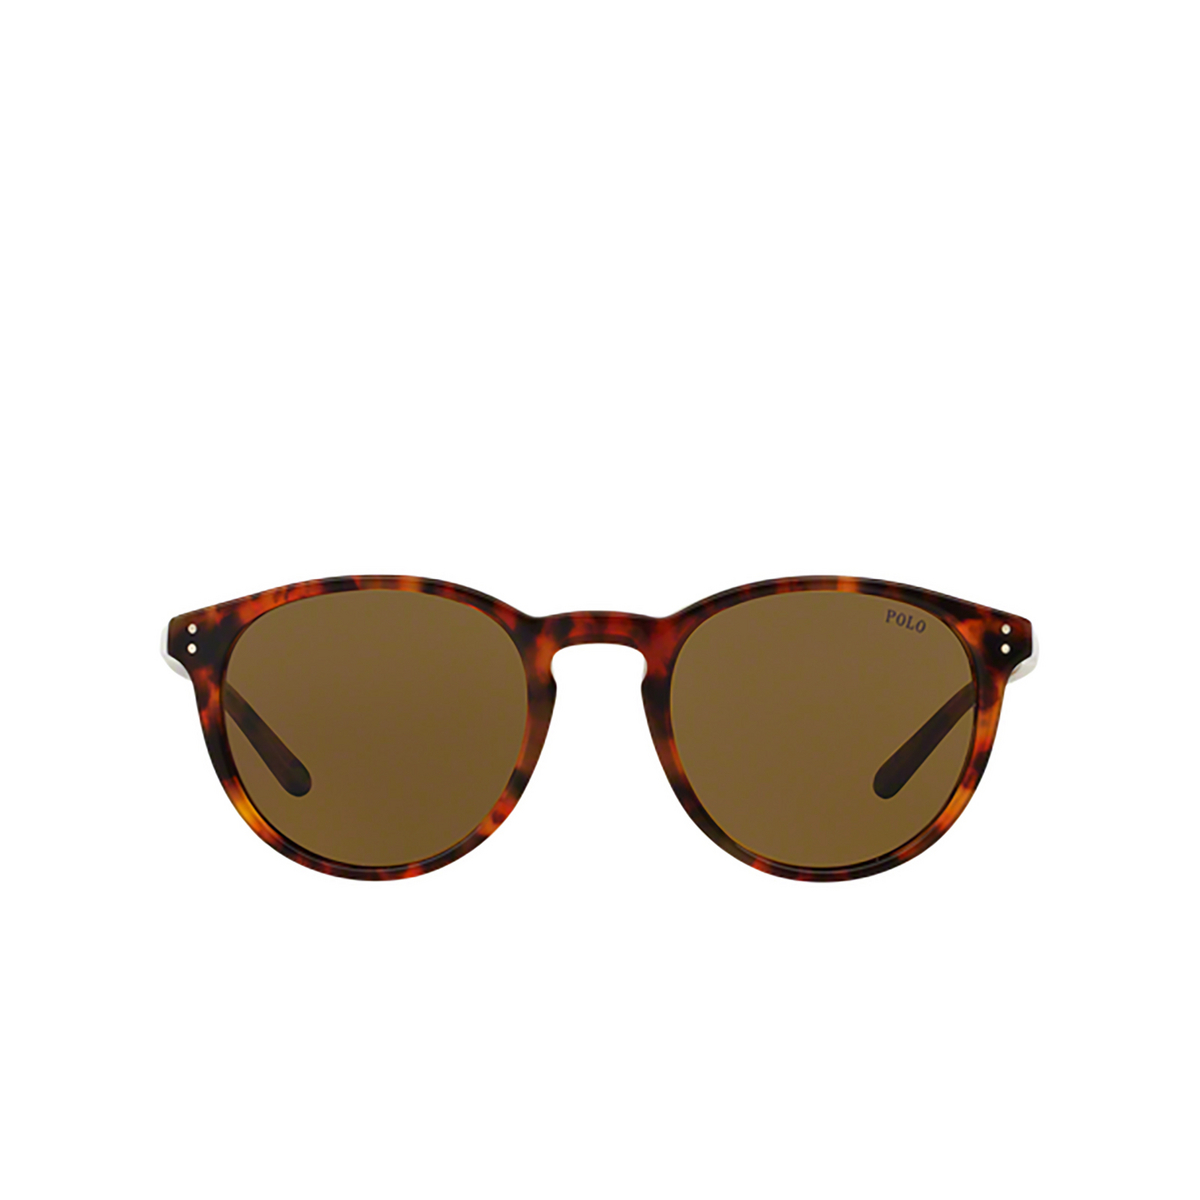 Polo Ralph Lauren® Round Sunglasses: PH4110 color Shiny Jerry Havana 501773 - front view.